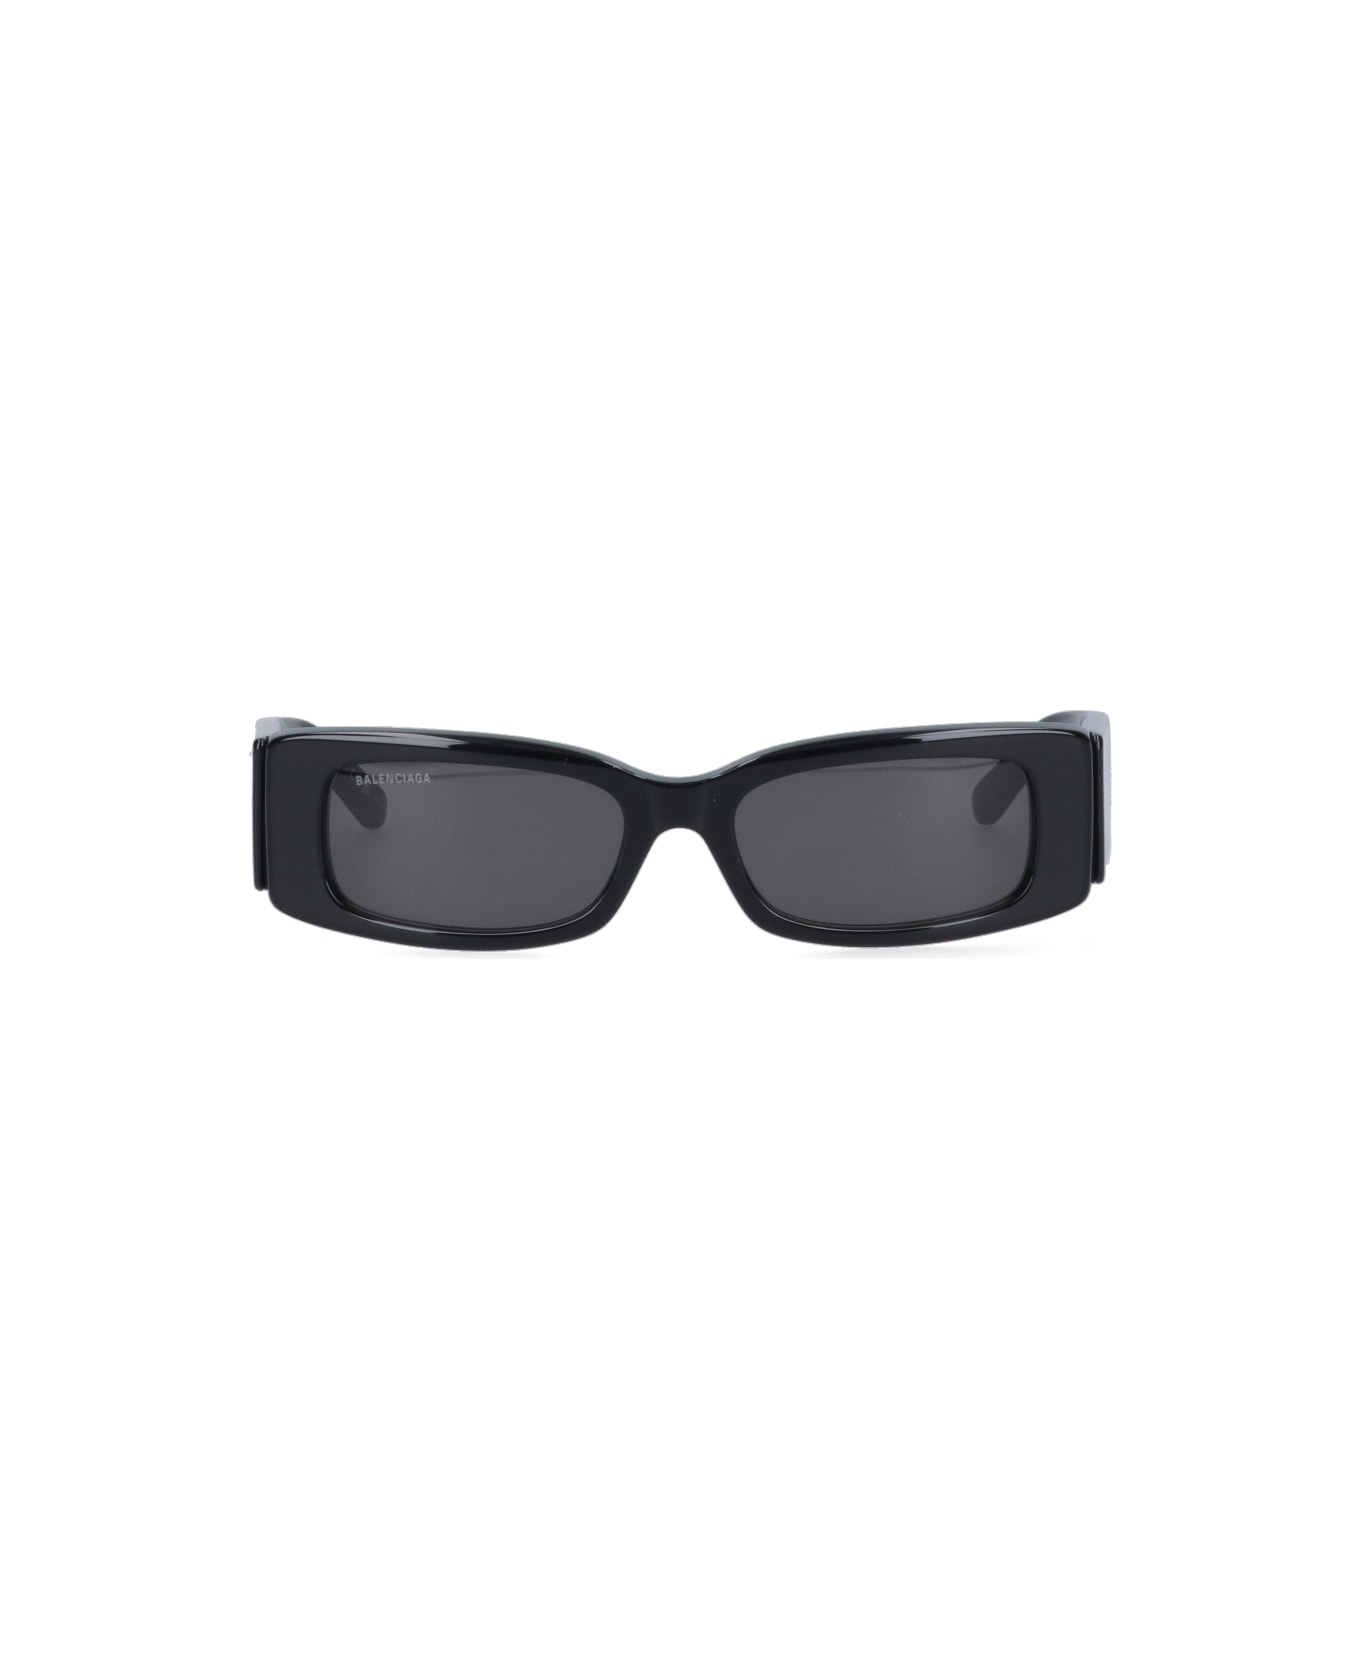 Balenciaga Eyewear Max Rectangle Sunglasses - Black サングラス